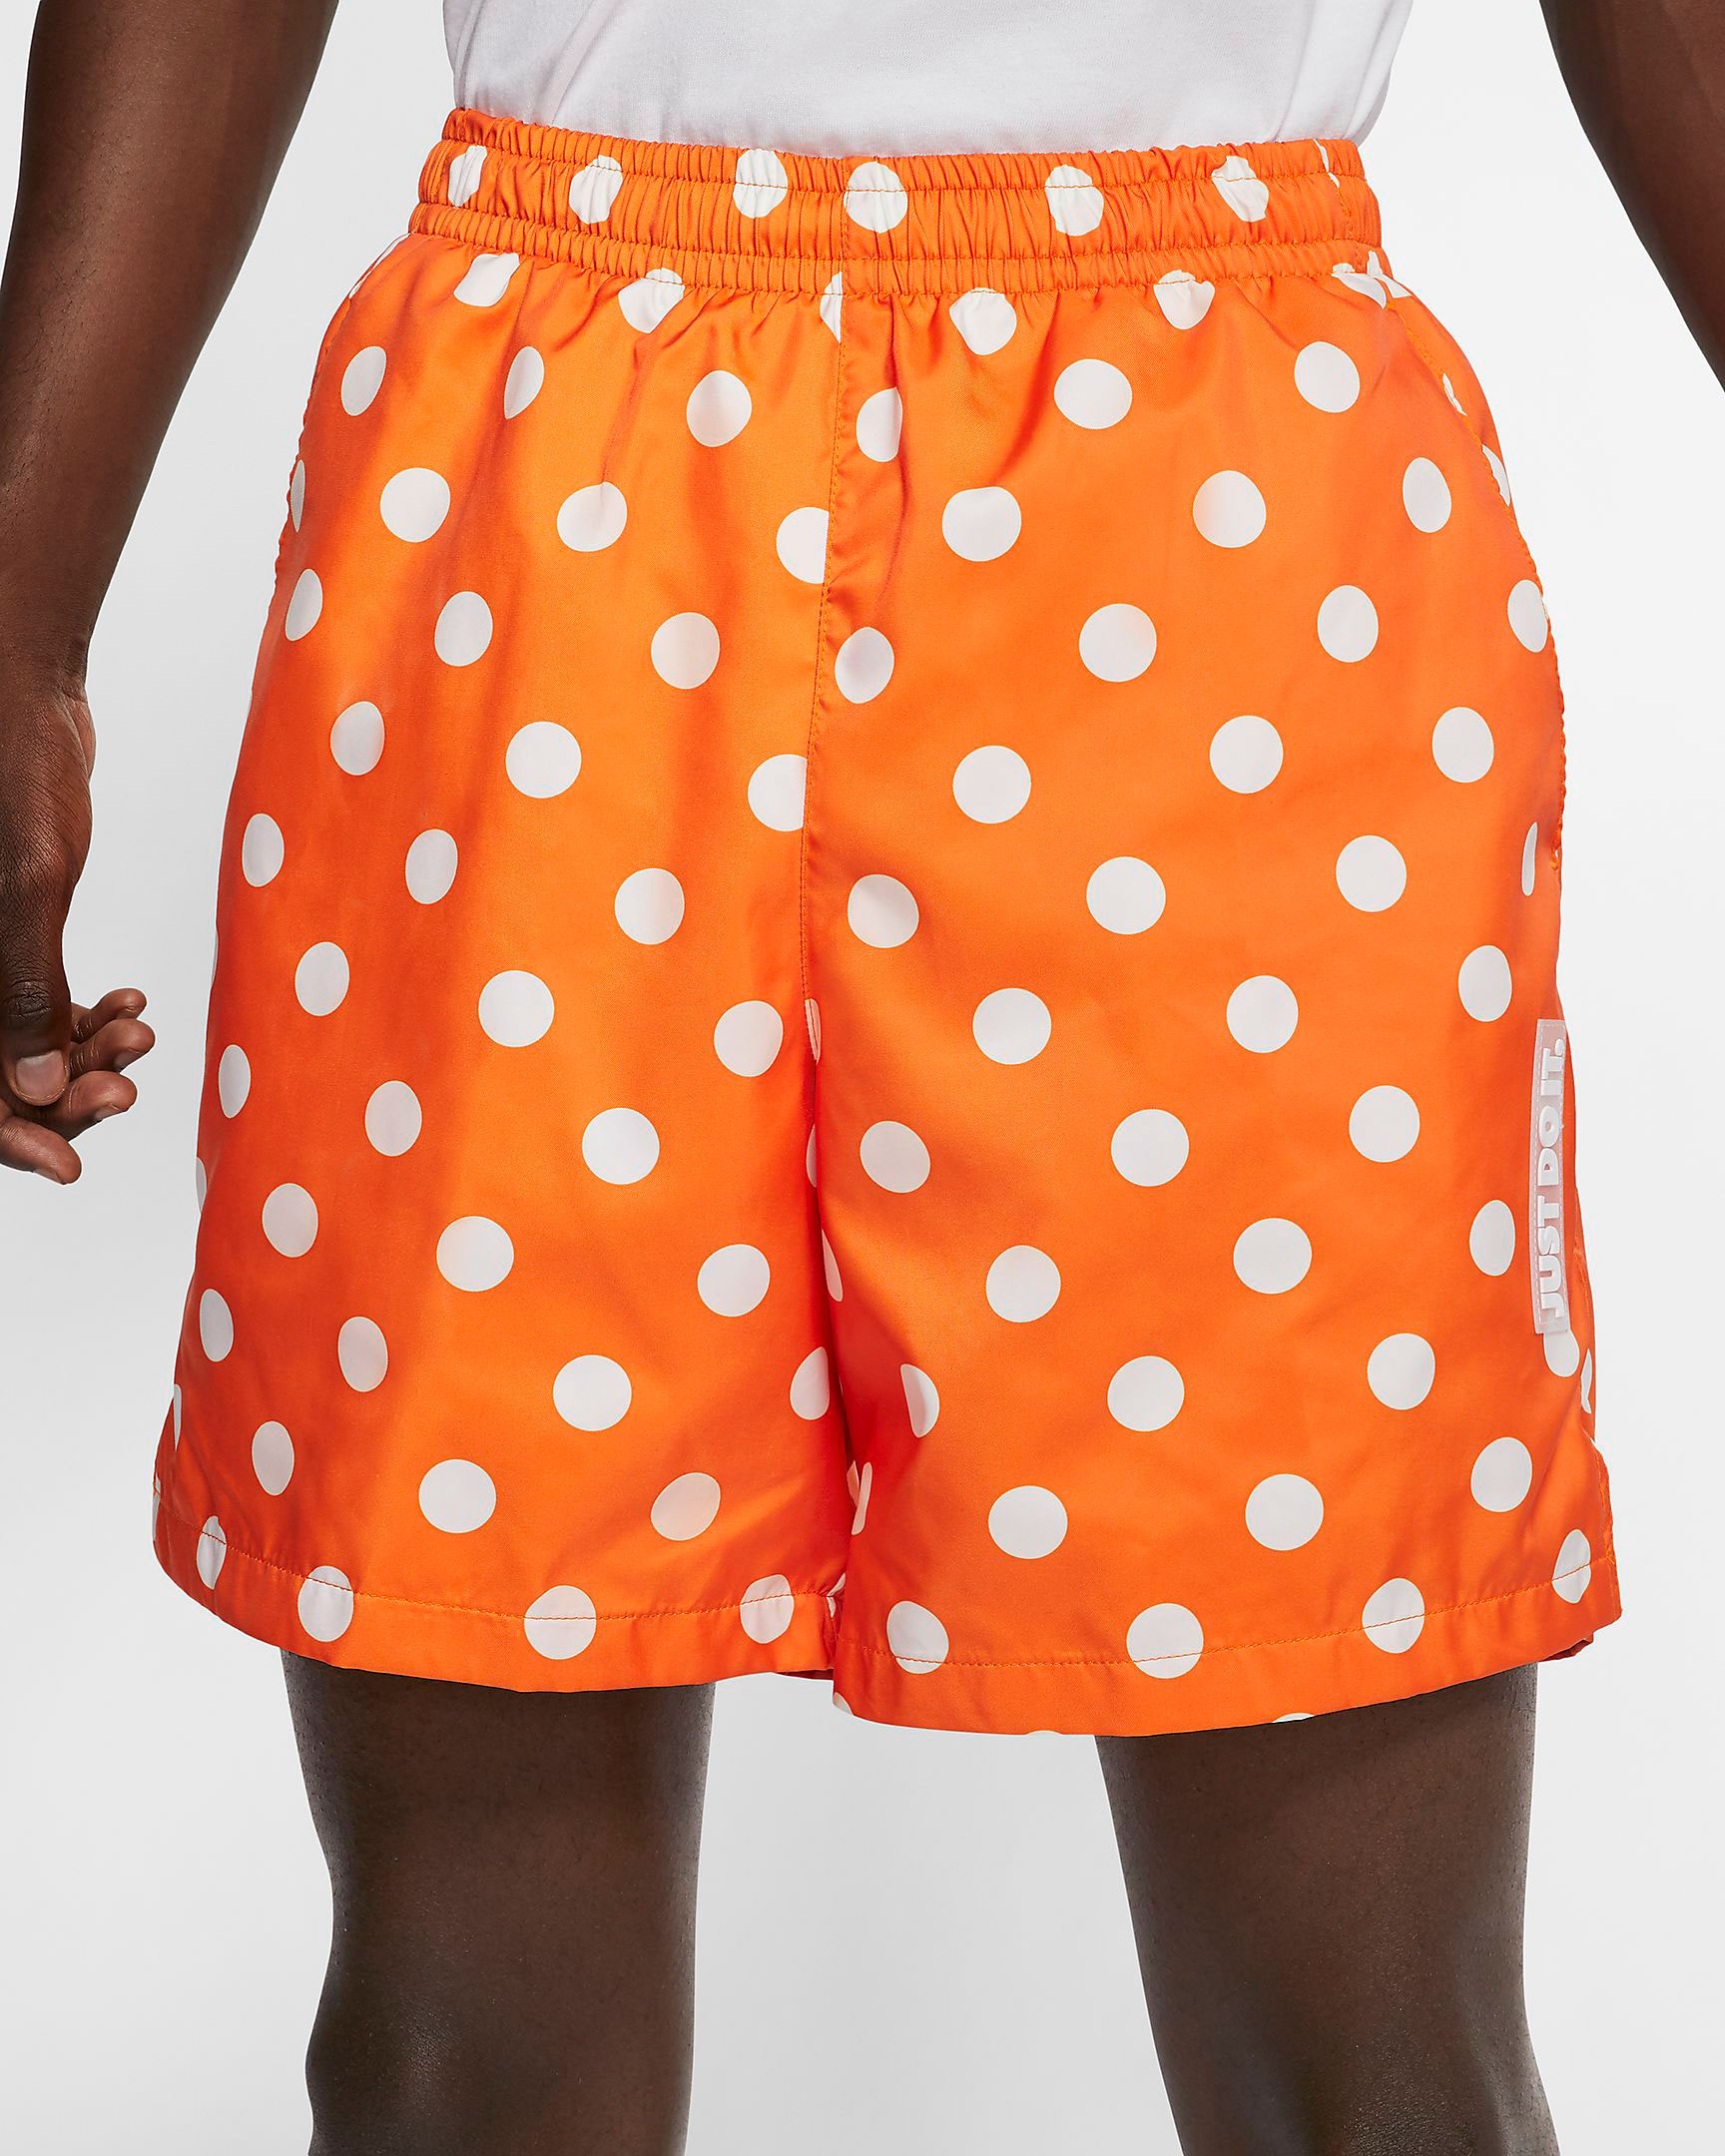 nike-pg-4-gatorade-gx-orange-shorts-match